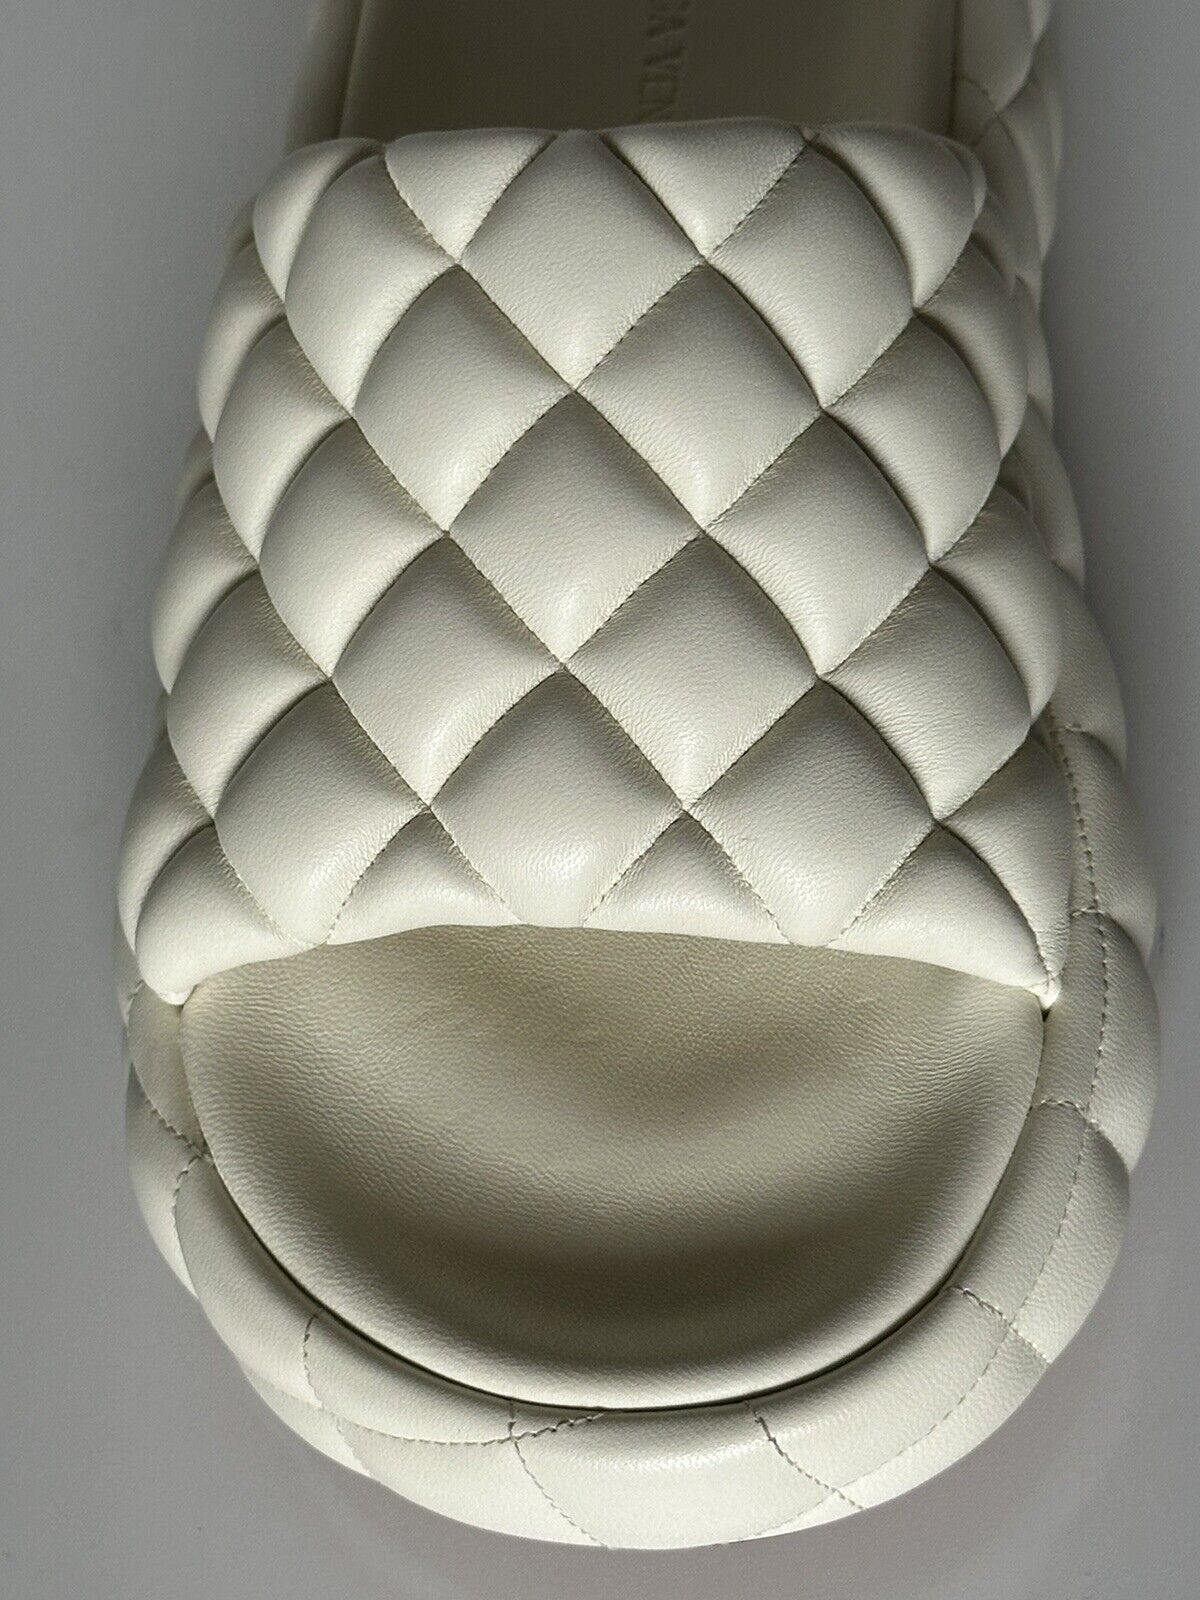 NIB $1450 Bottega Veneta White Quilted Leather Padded Sandals 9 US 708885 IT